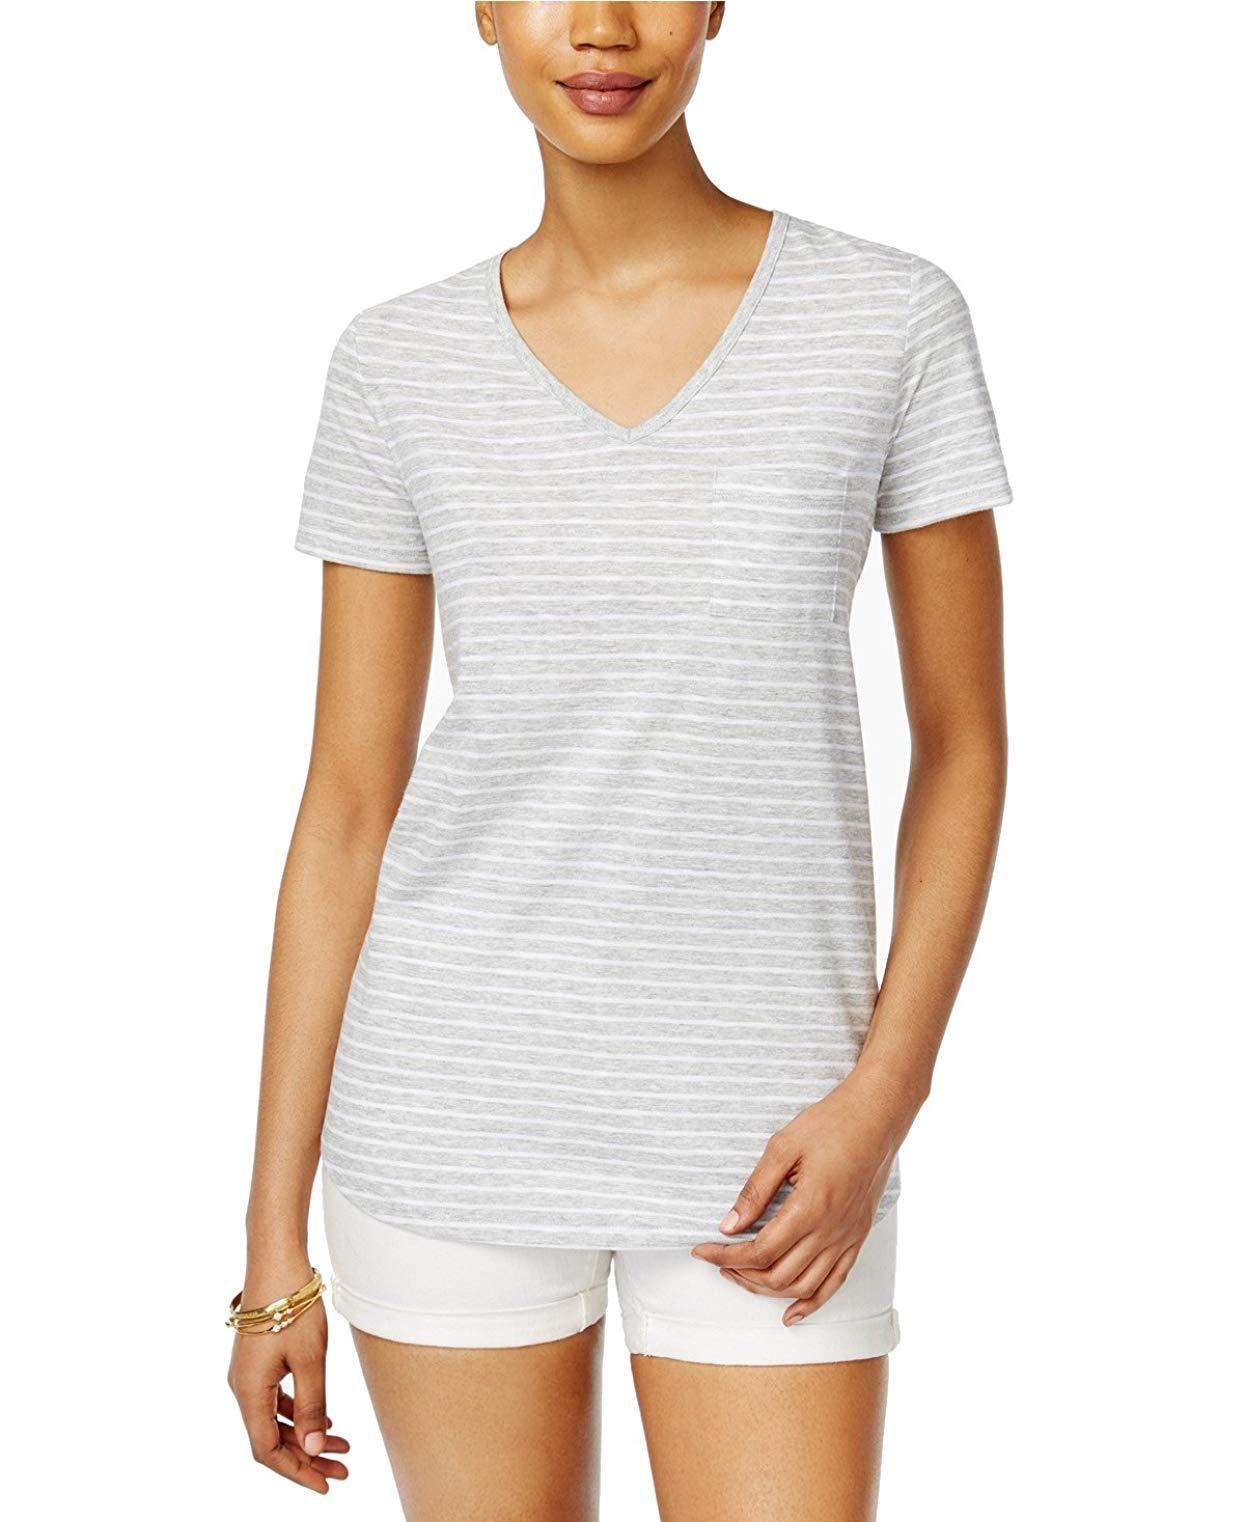 Style Co Striped T-Shirt Light GreyWhite S